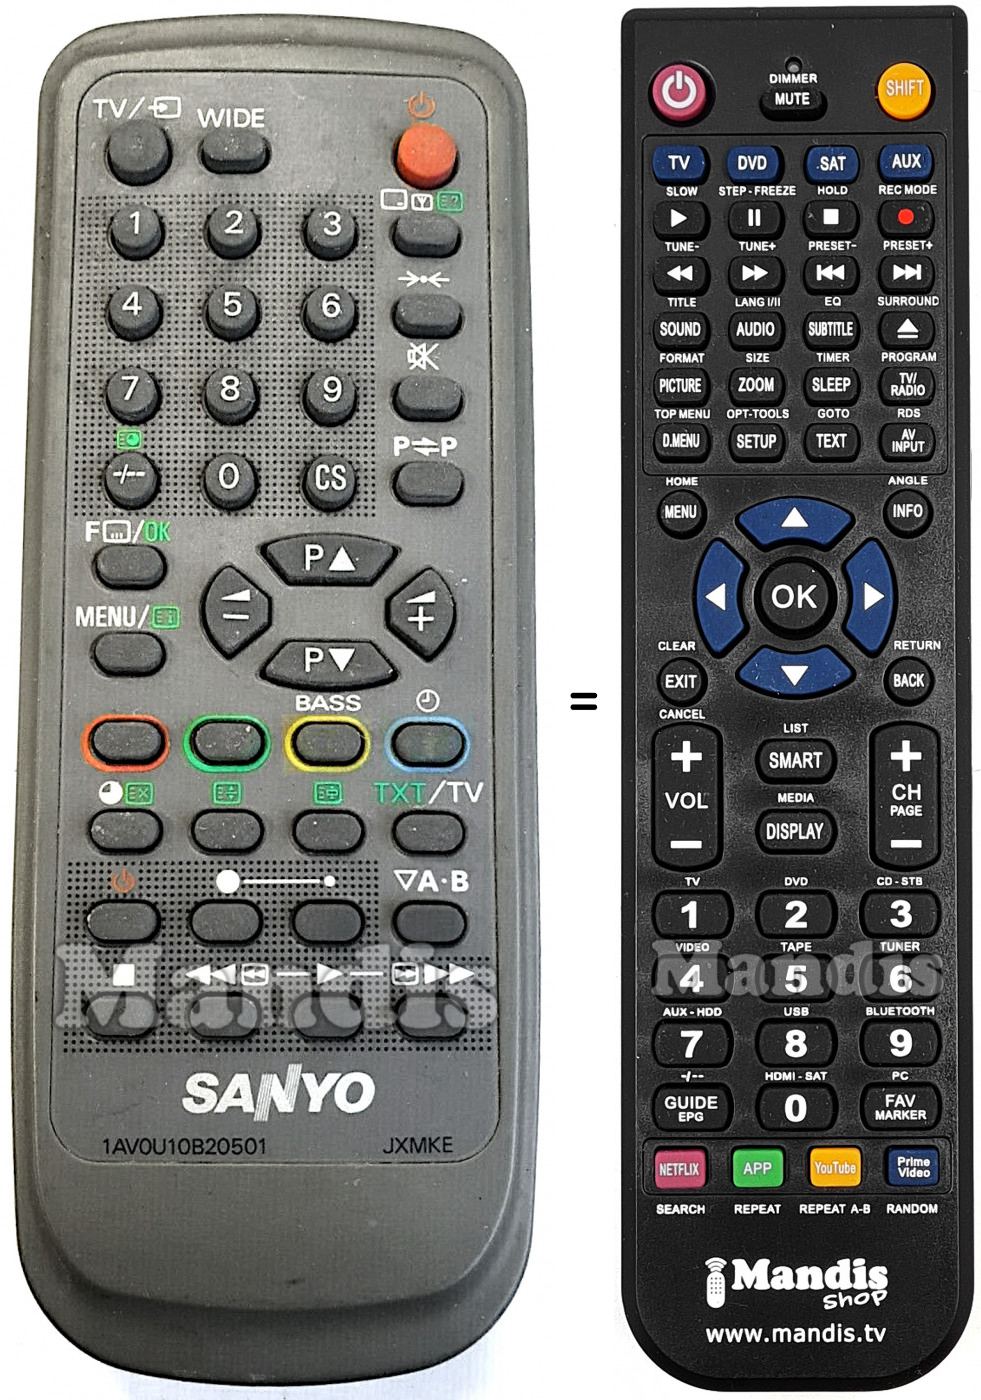 Replacement remote control Sanyo JXMKE